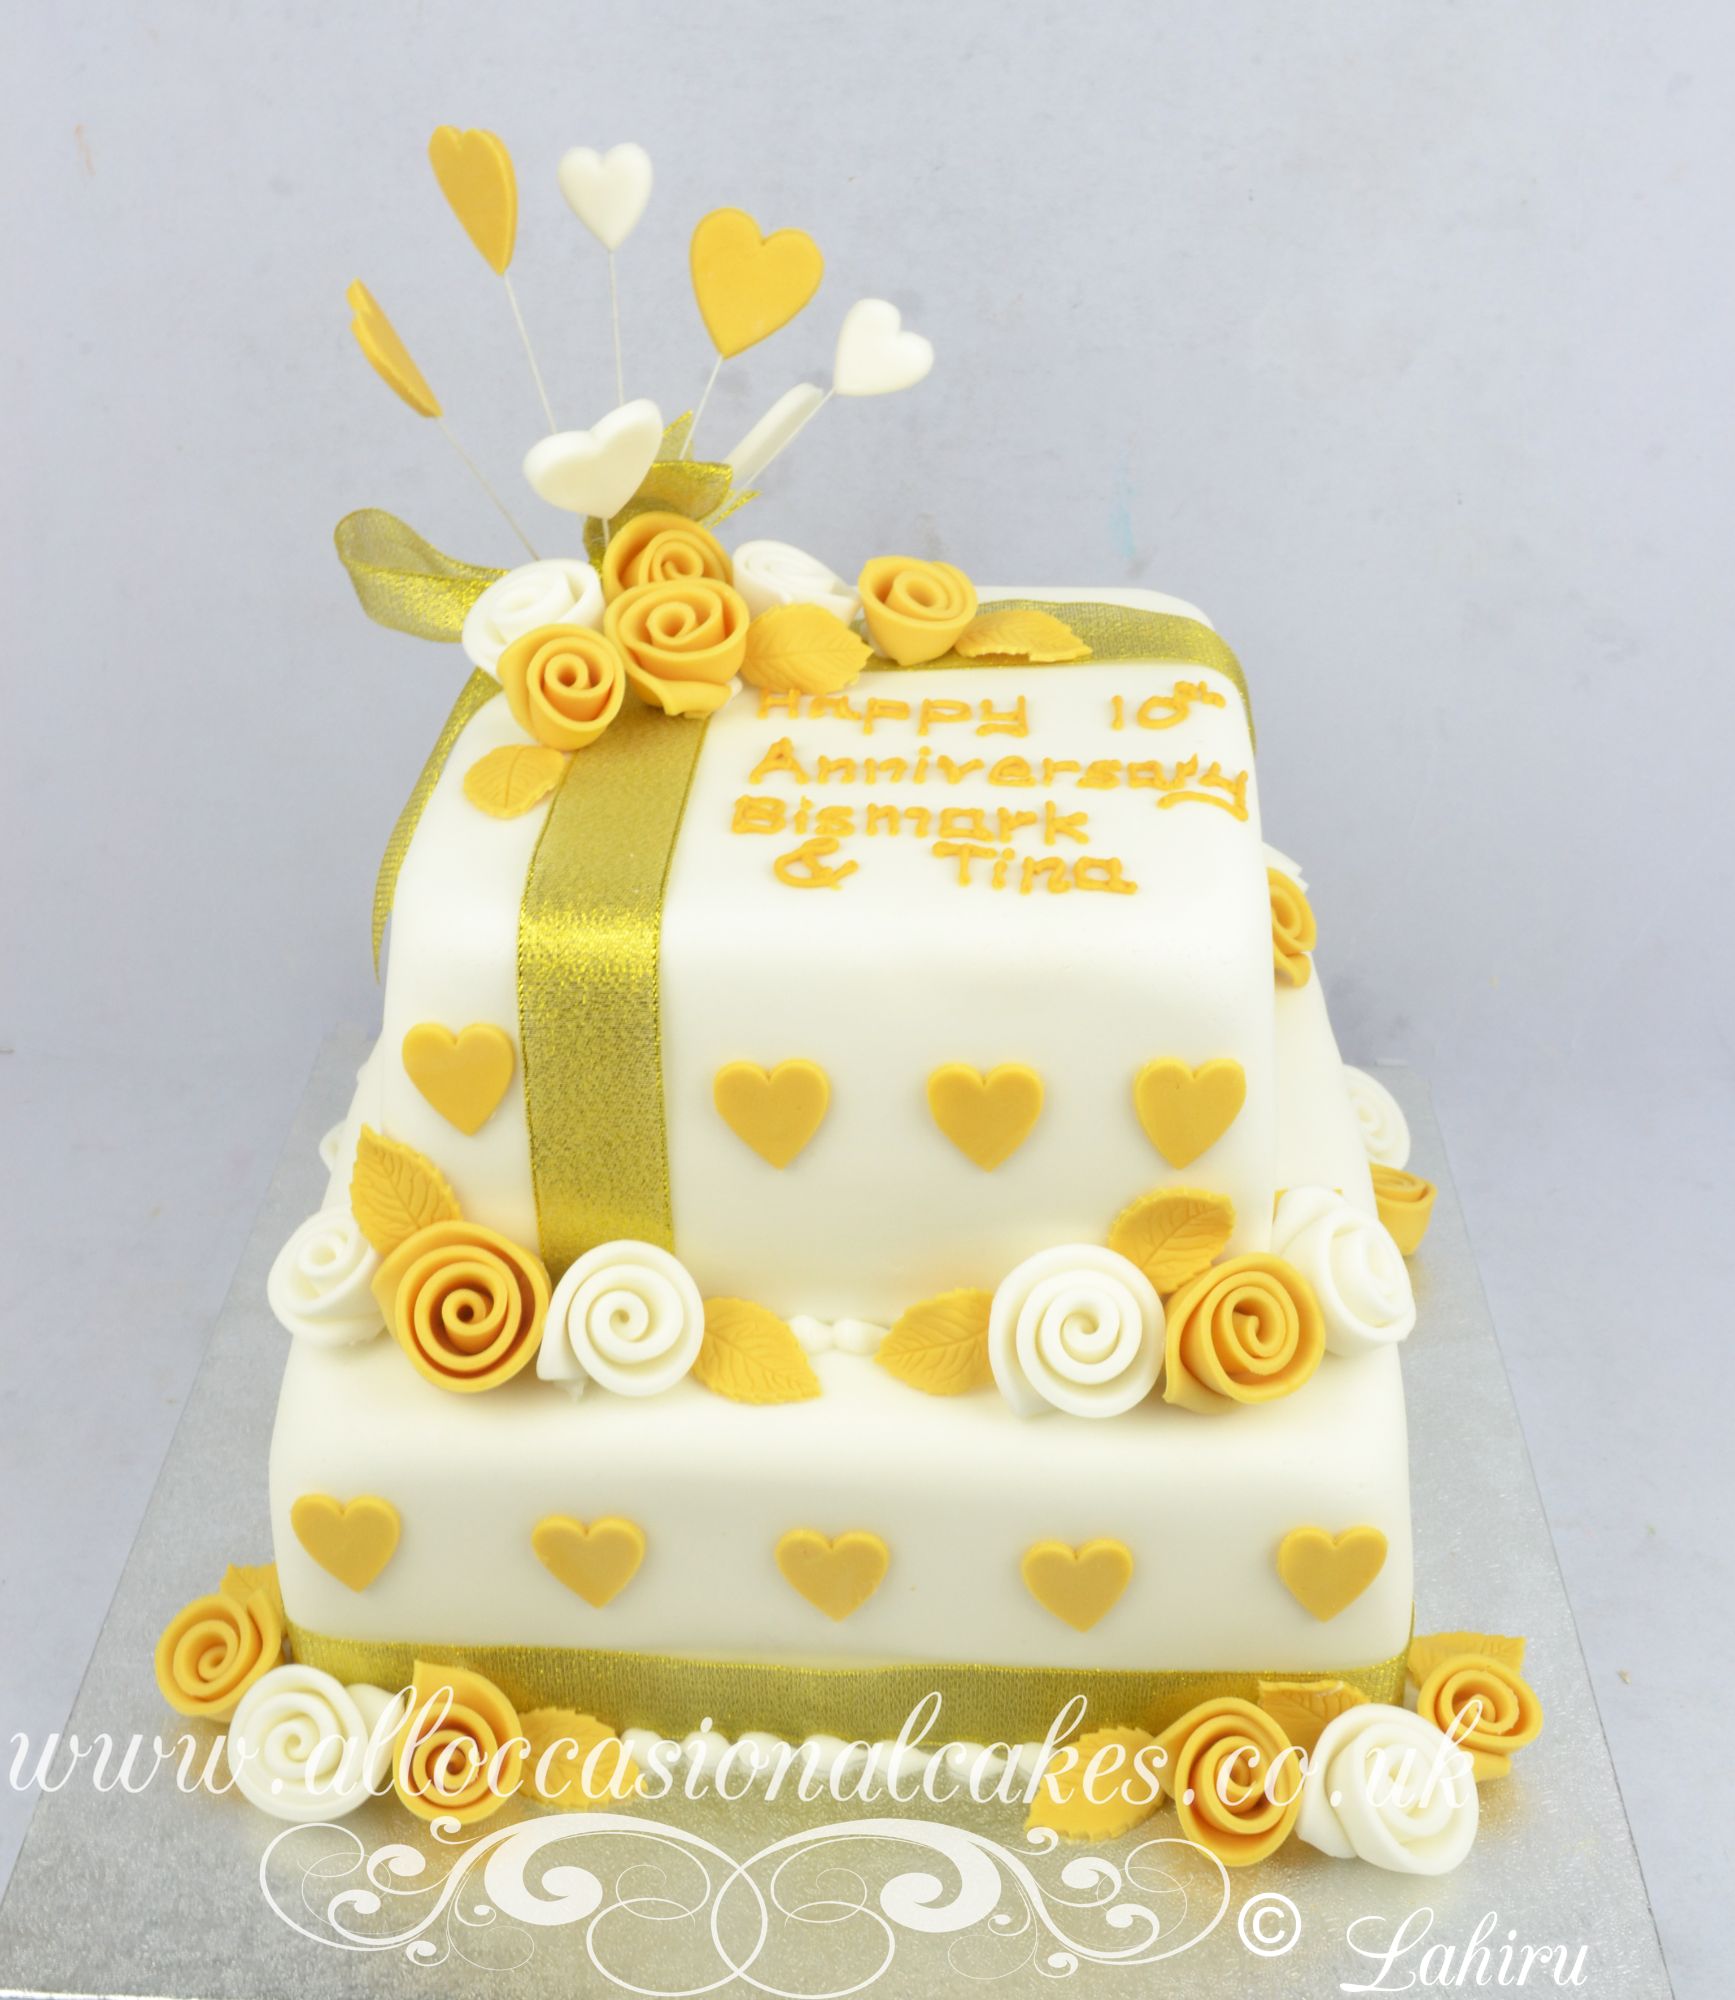 golden wedding anniversary cakes